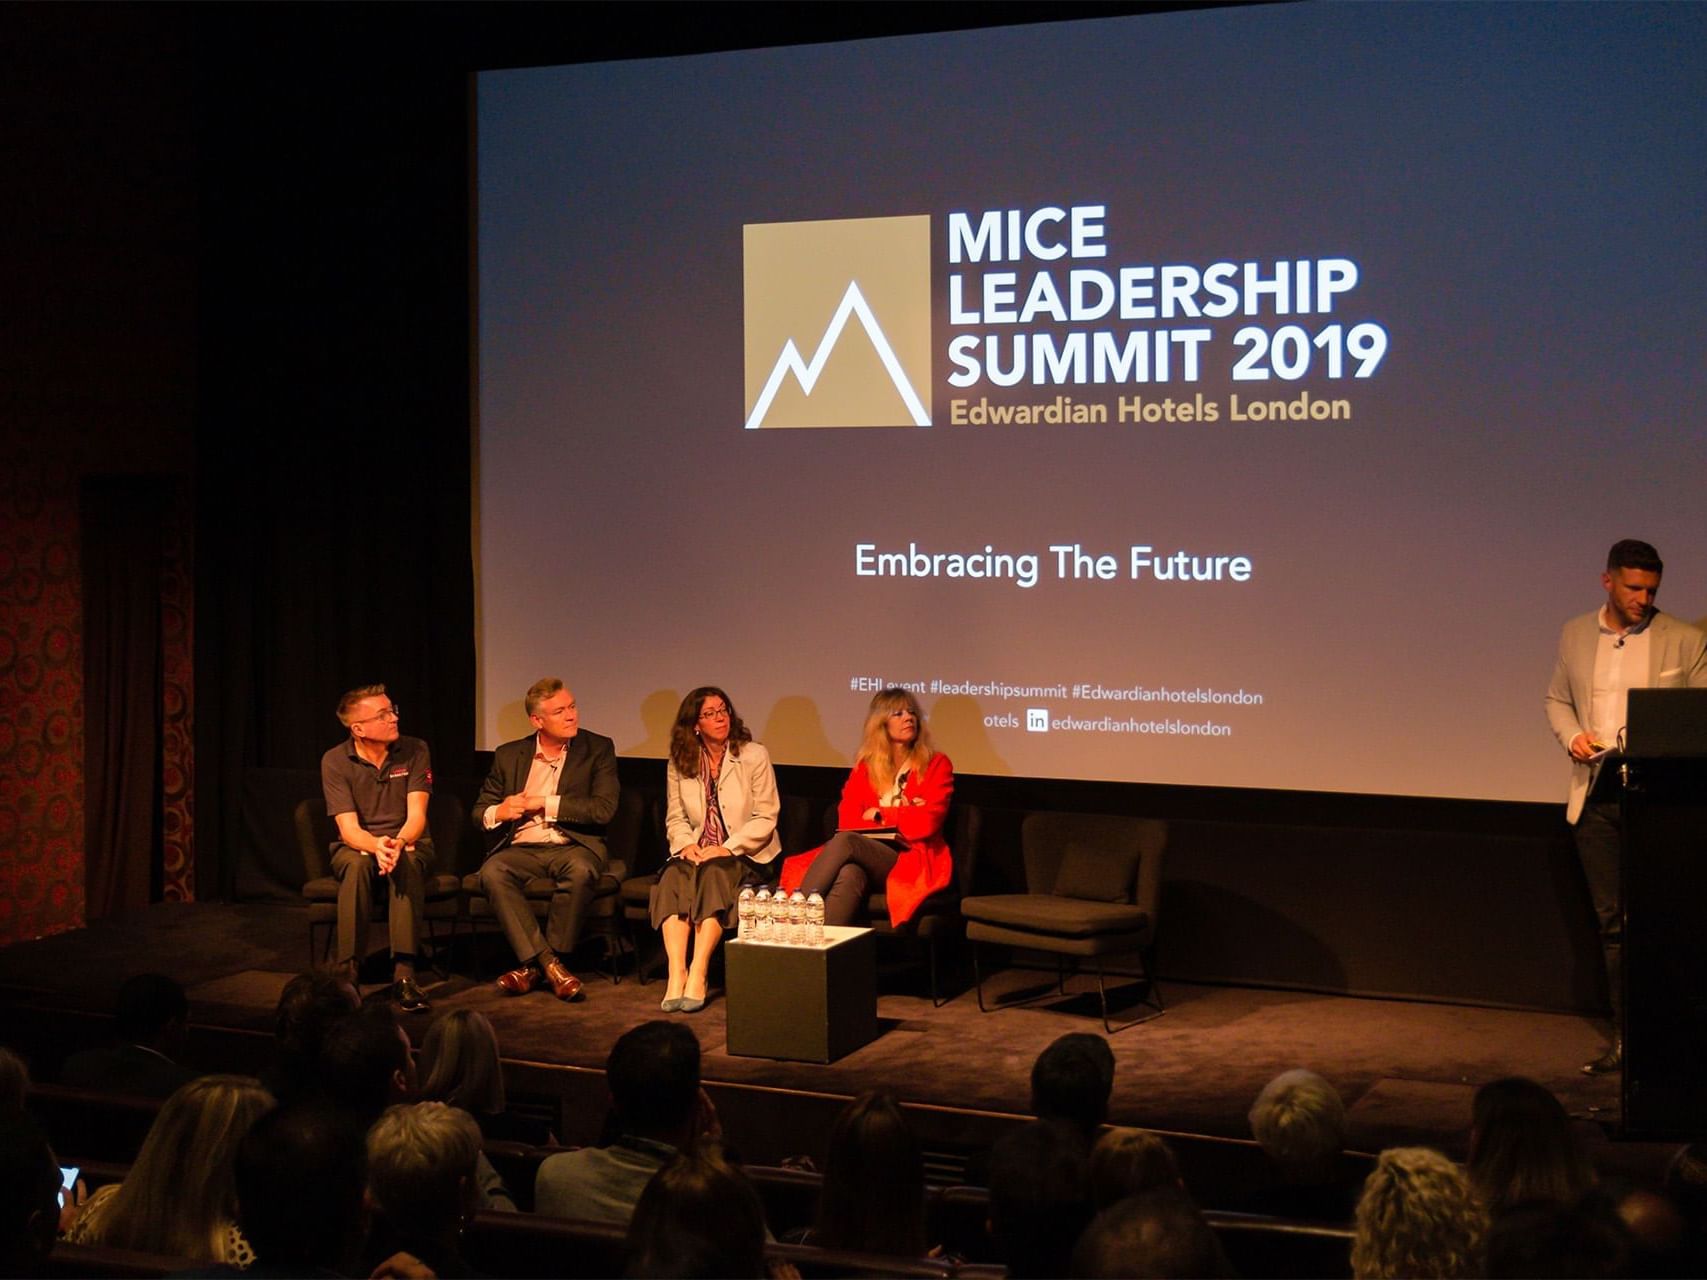 2019 MICE Leadership Summit Podium discussion at The Ewardian Manchester, Edwardian Group